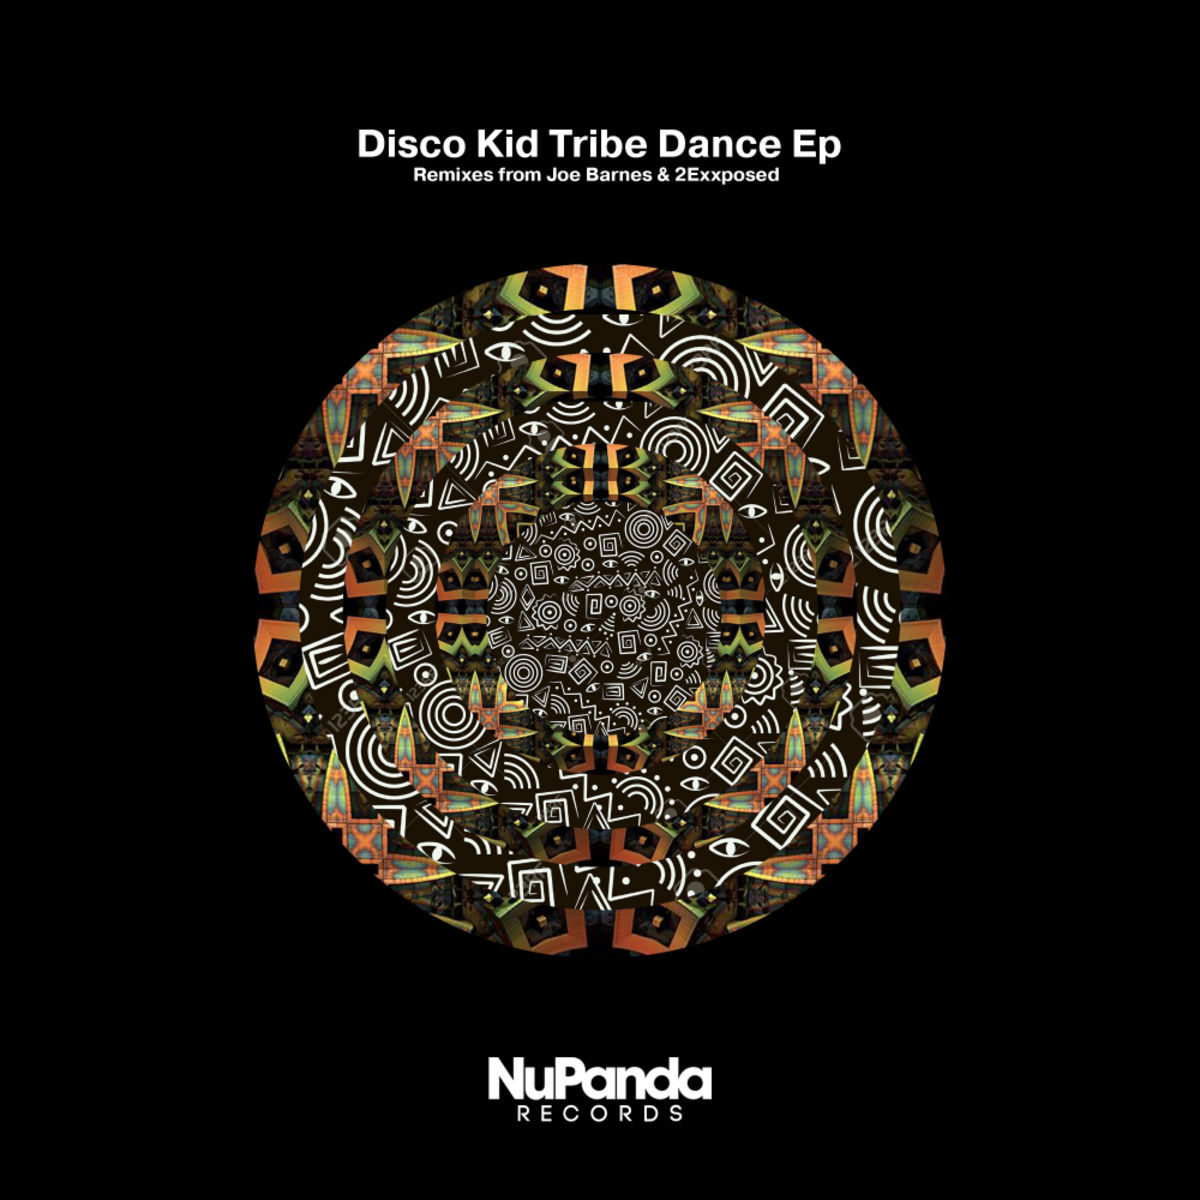 Disco Kid - Tribe Dance EP / NuPanda Records